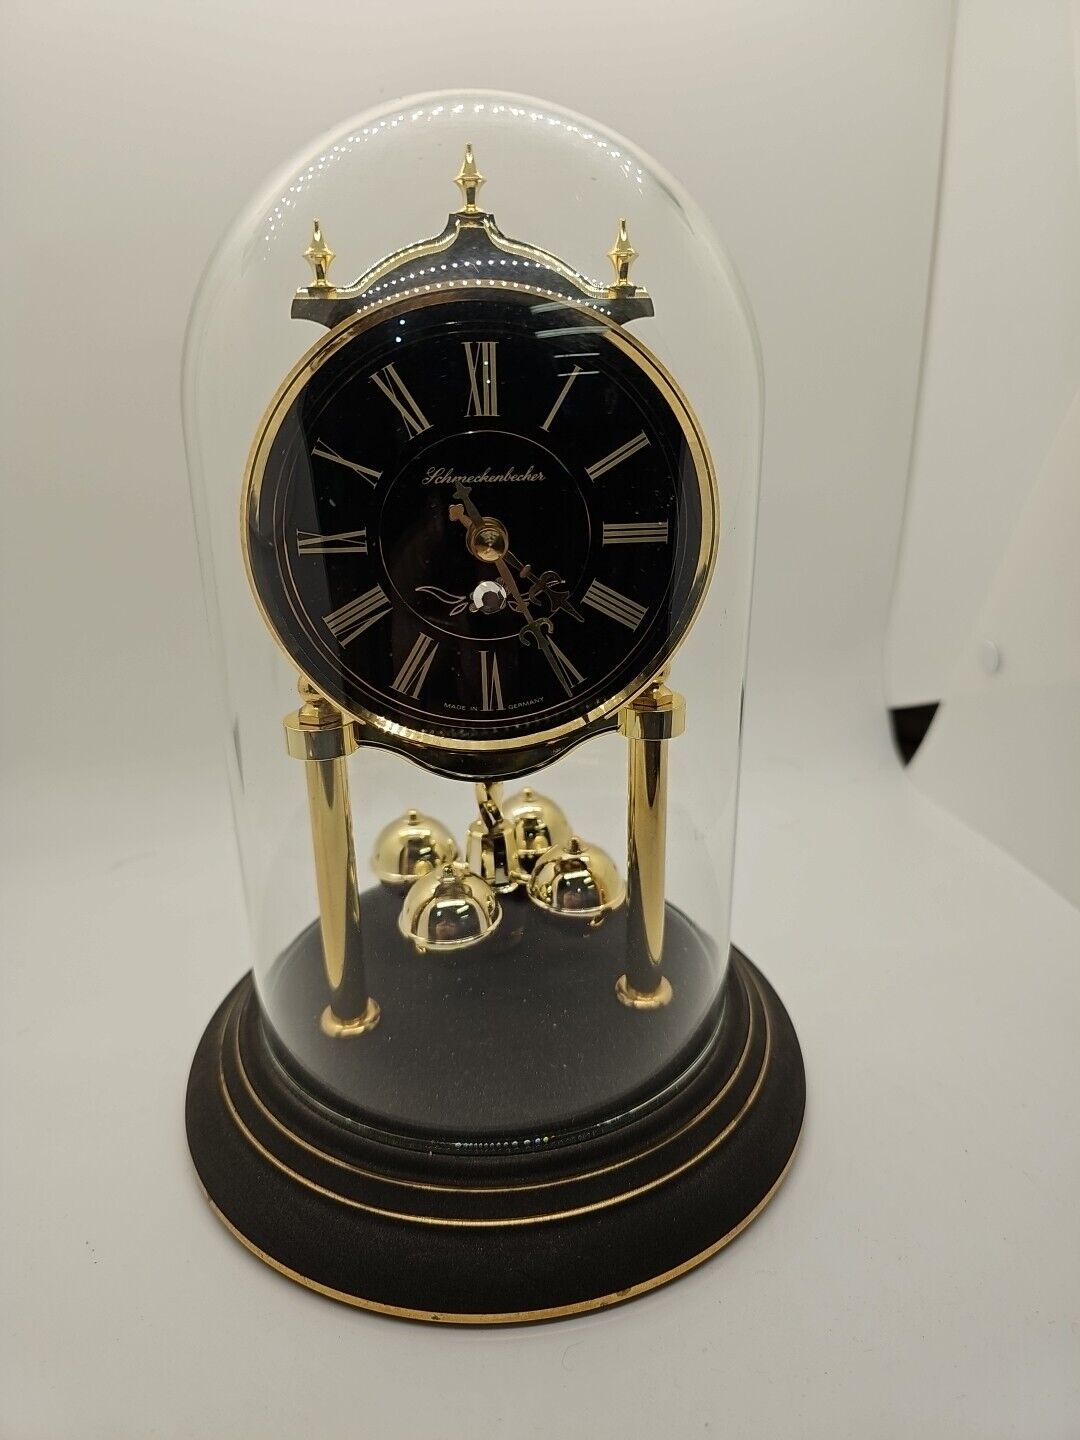  E.Schmeckenbecher  Clock Made  in W. Germany  It Dose Work